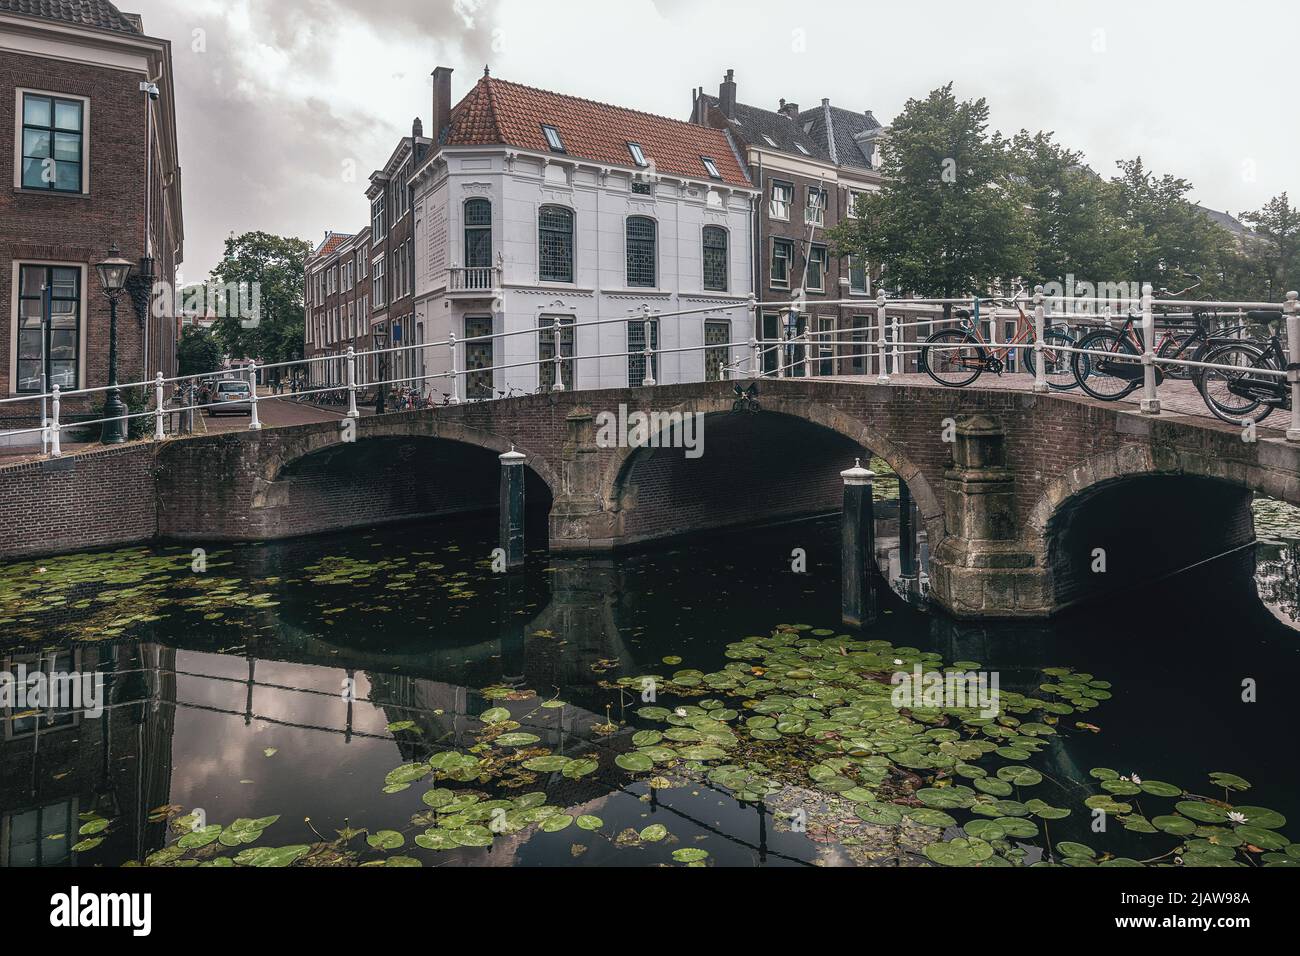 Leiden, Netherlands - July 25, 2021: Stock Photo